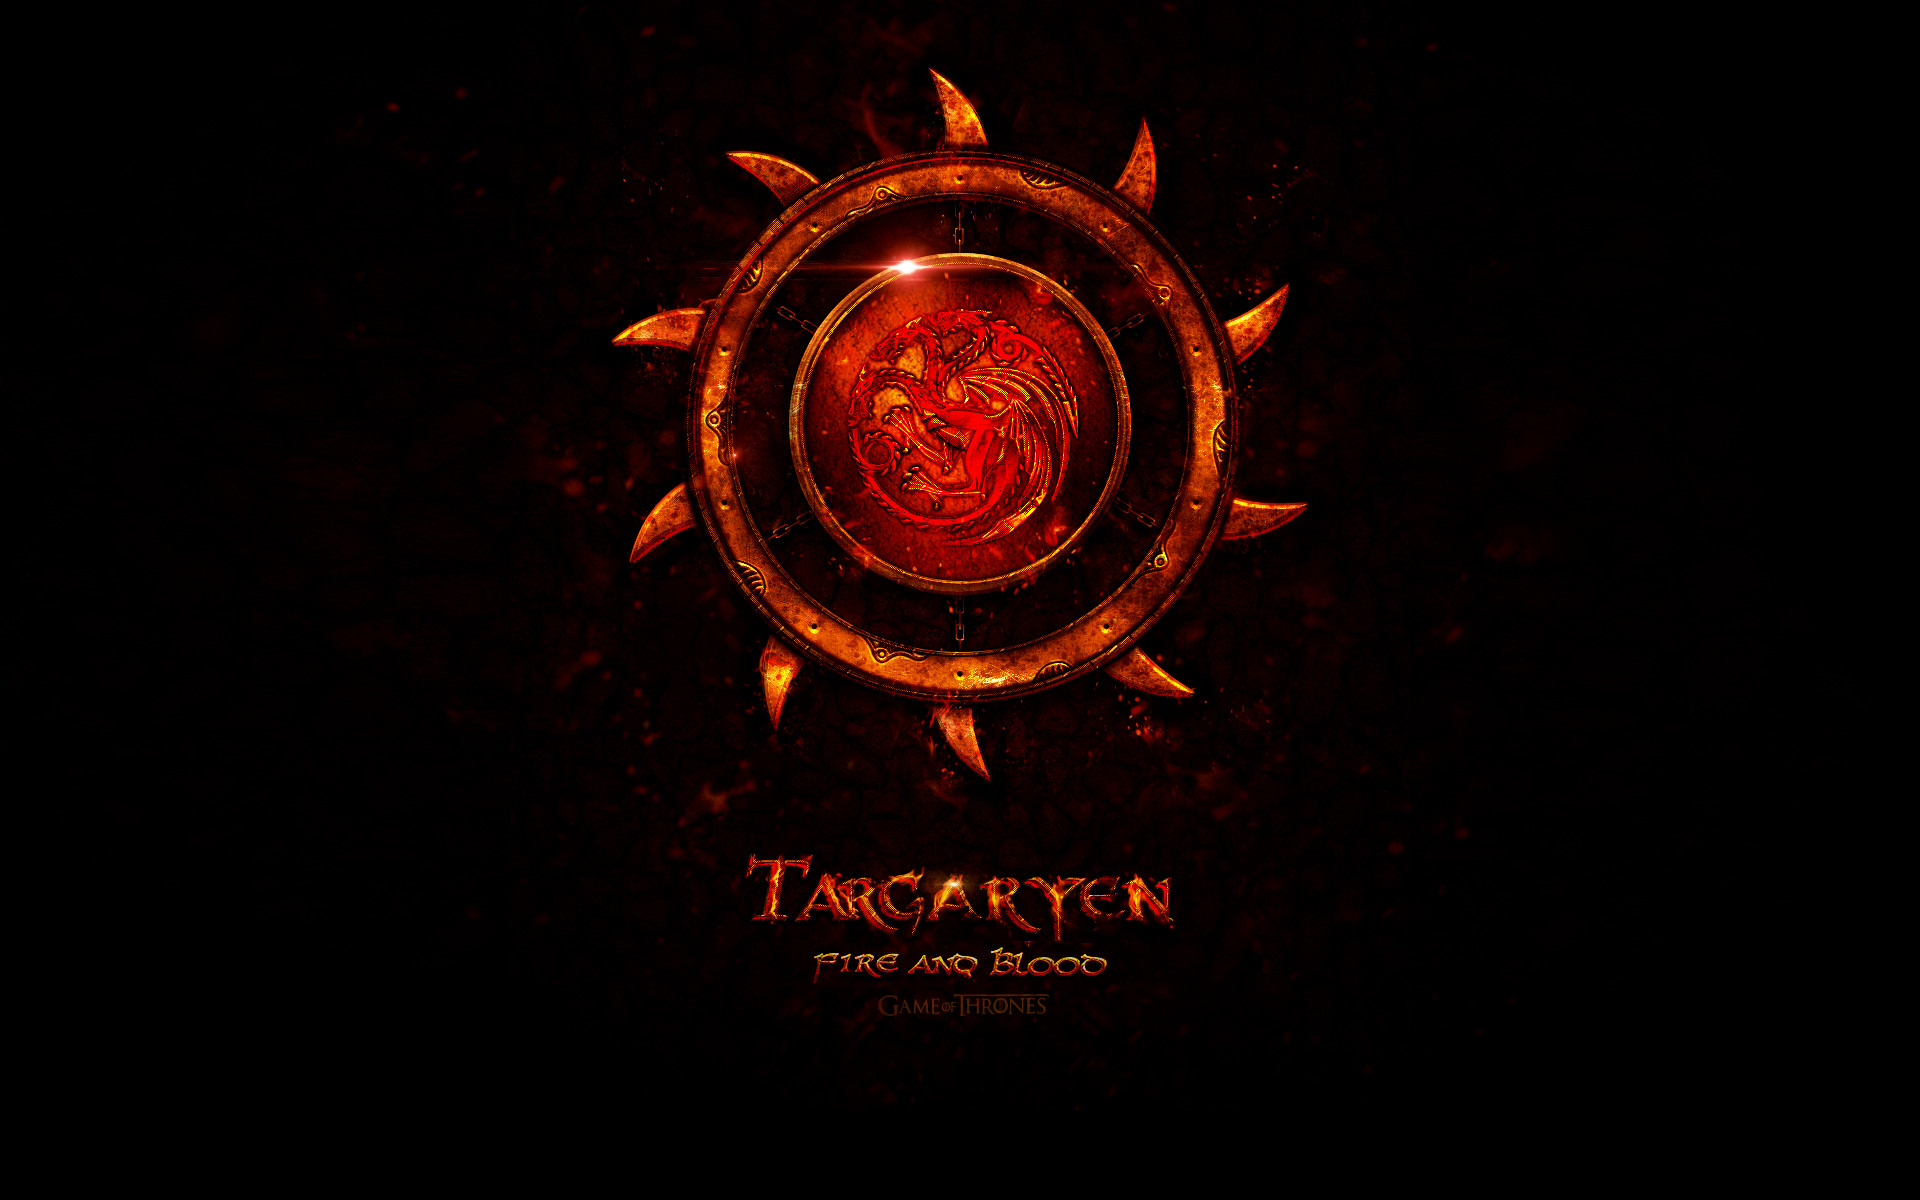 … Game of Thrones Targaryen wallpaeper by jjfwh